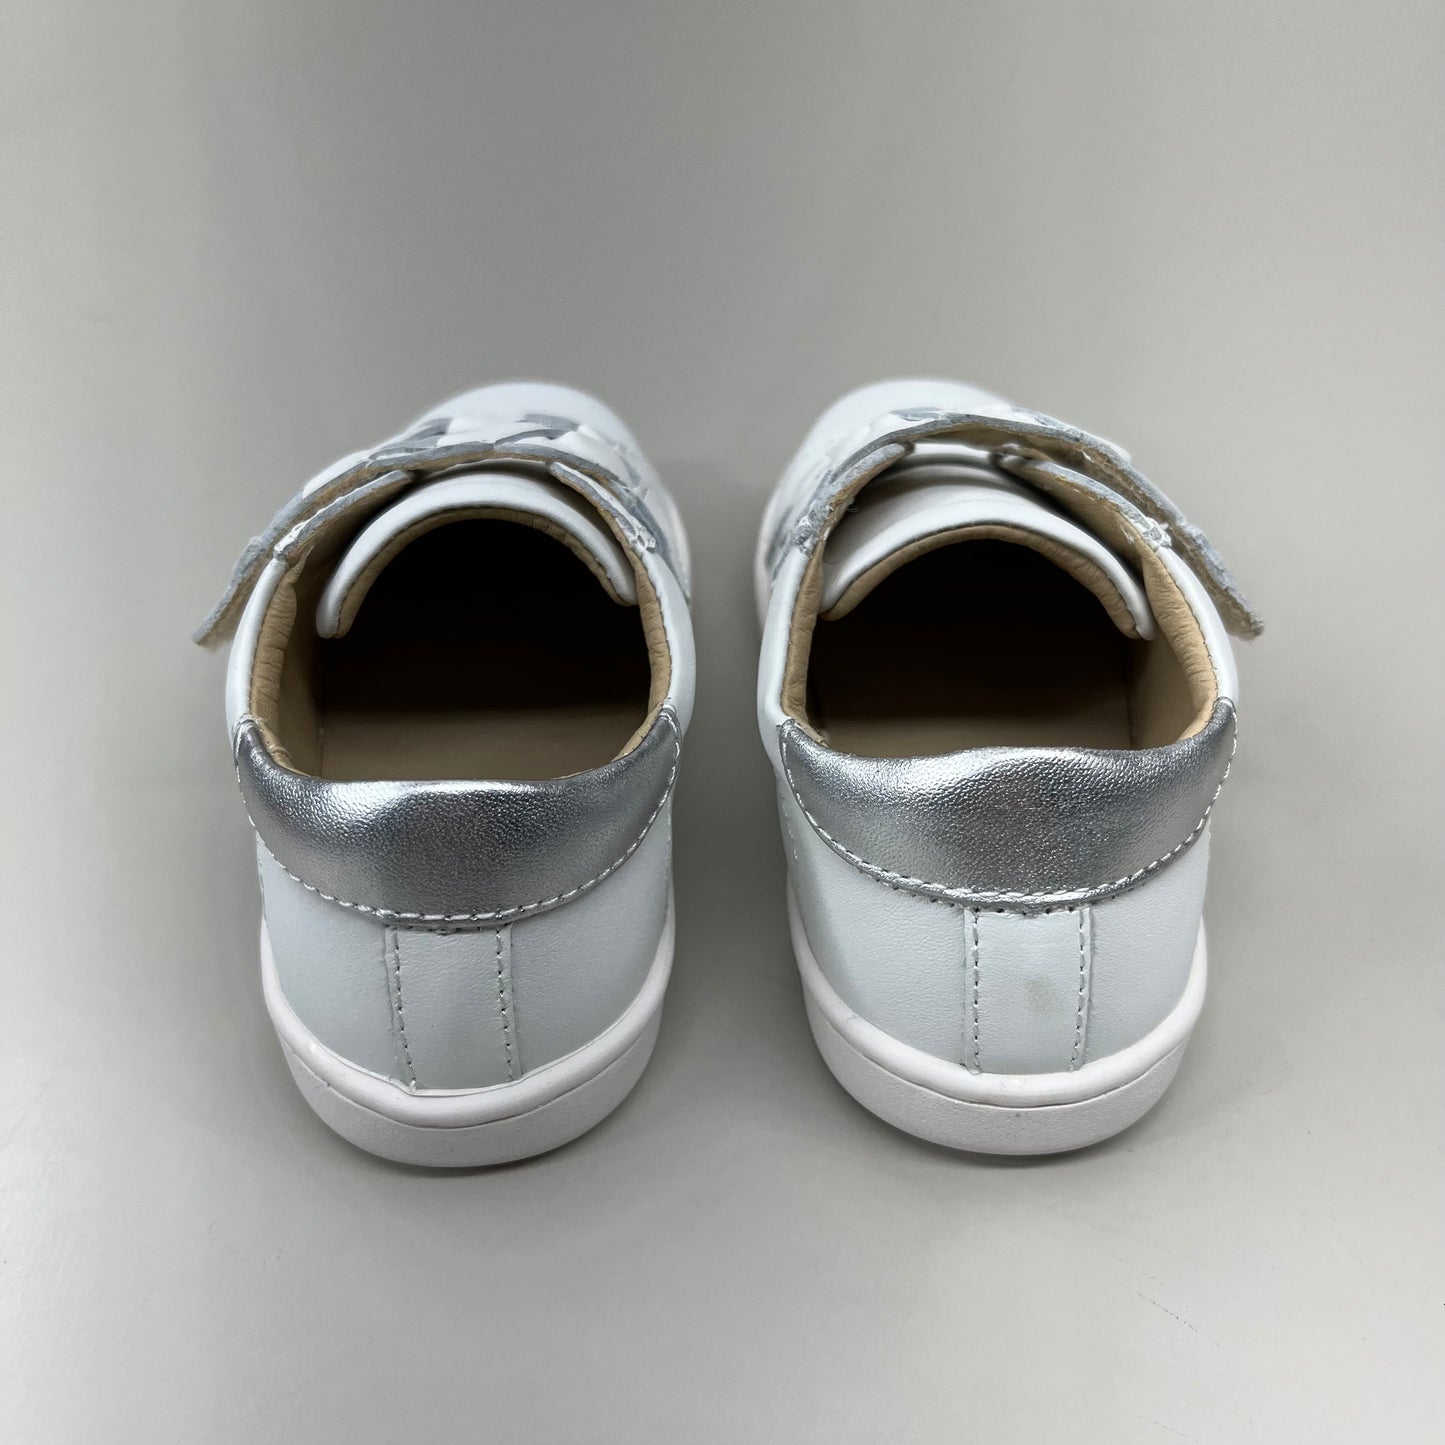 OLD SOLES Baby Plats Leather Shoe Sz 7 EU 23 Snow / Silver #6134